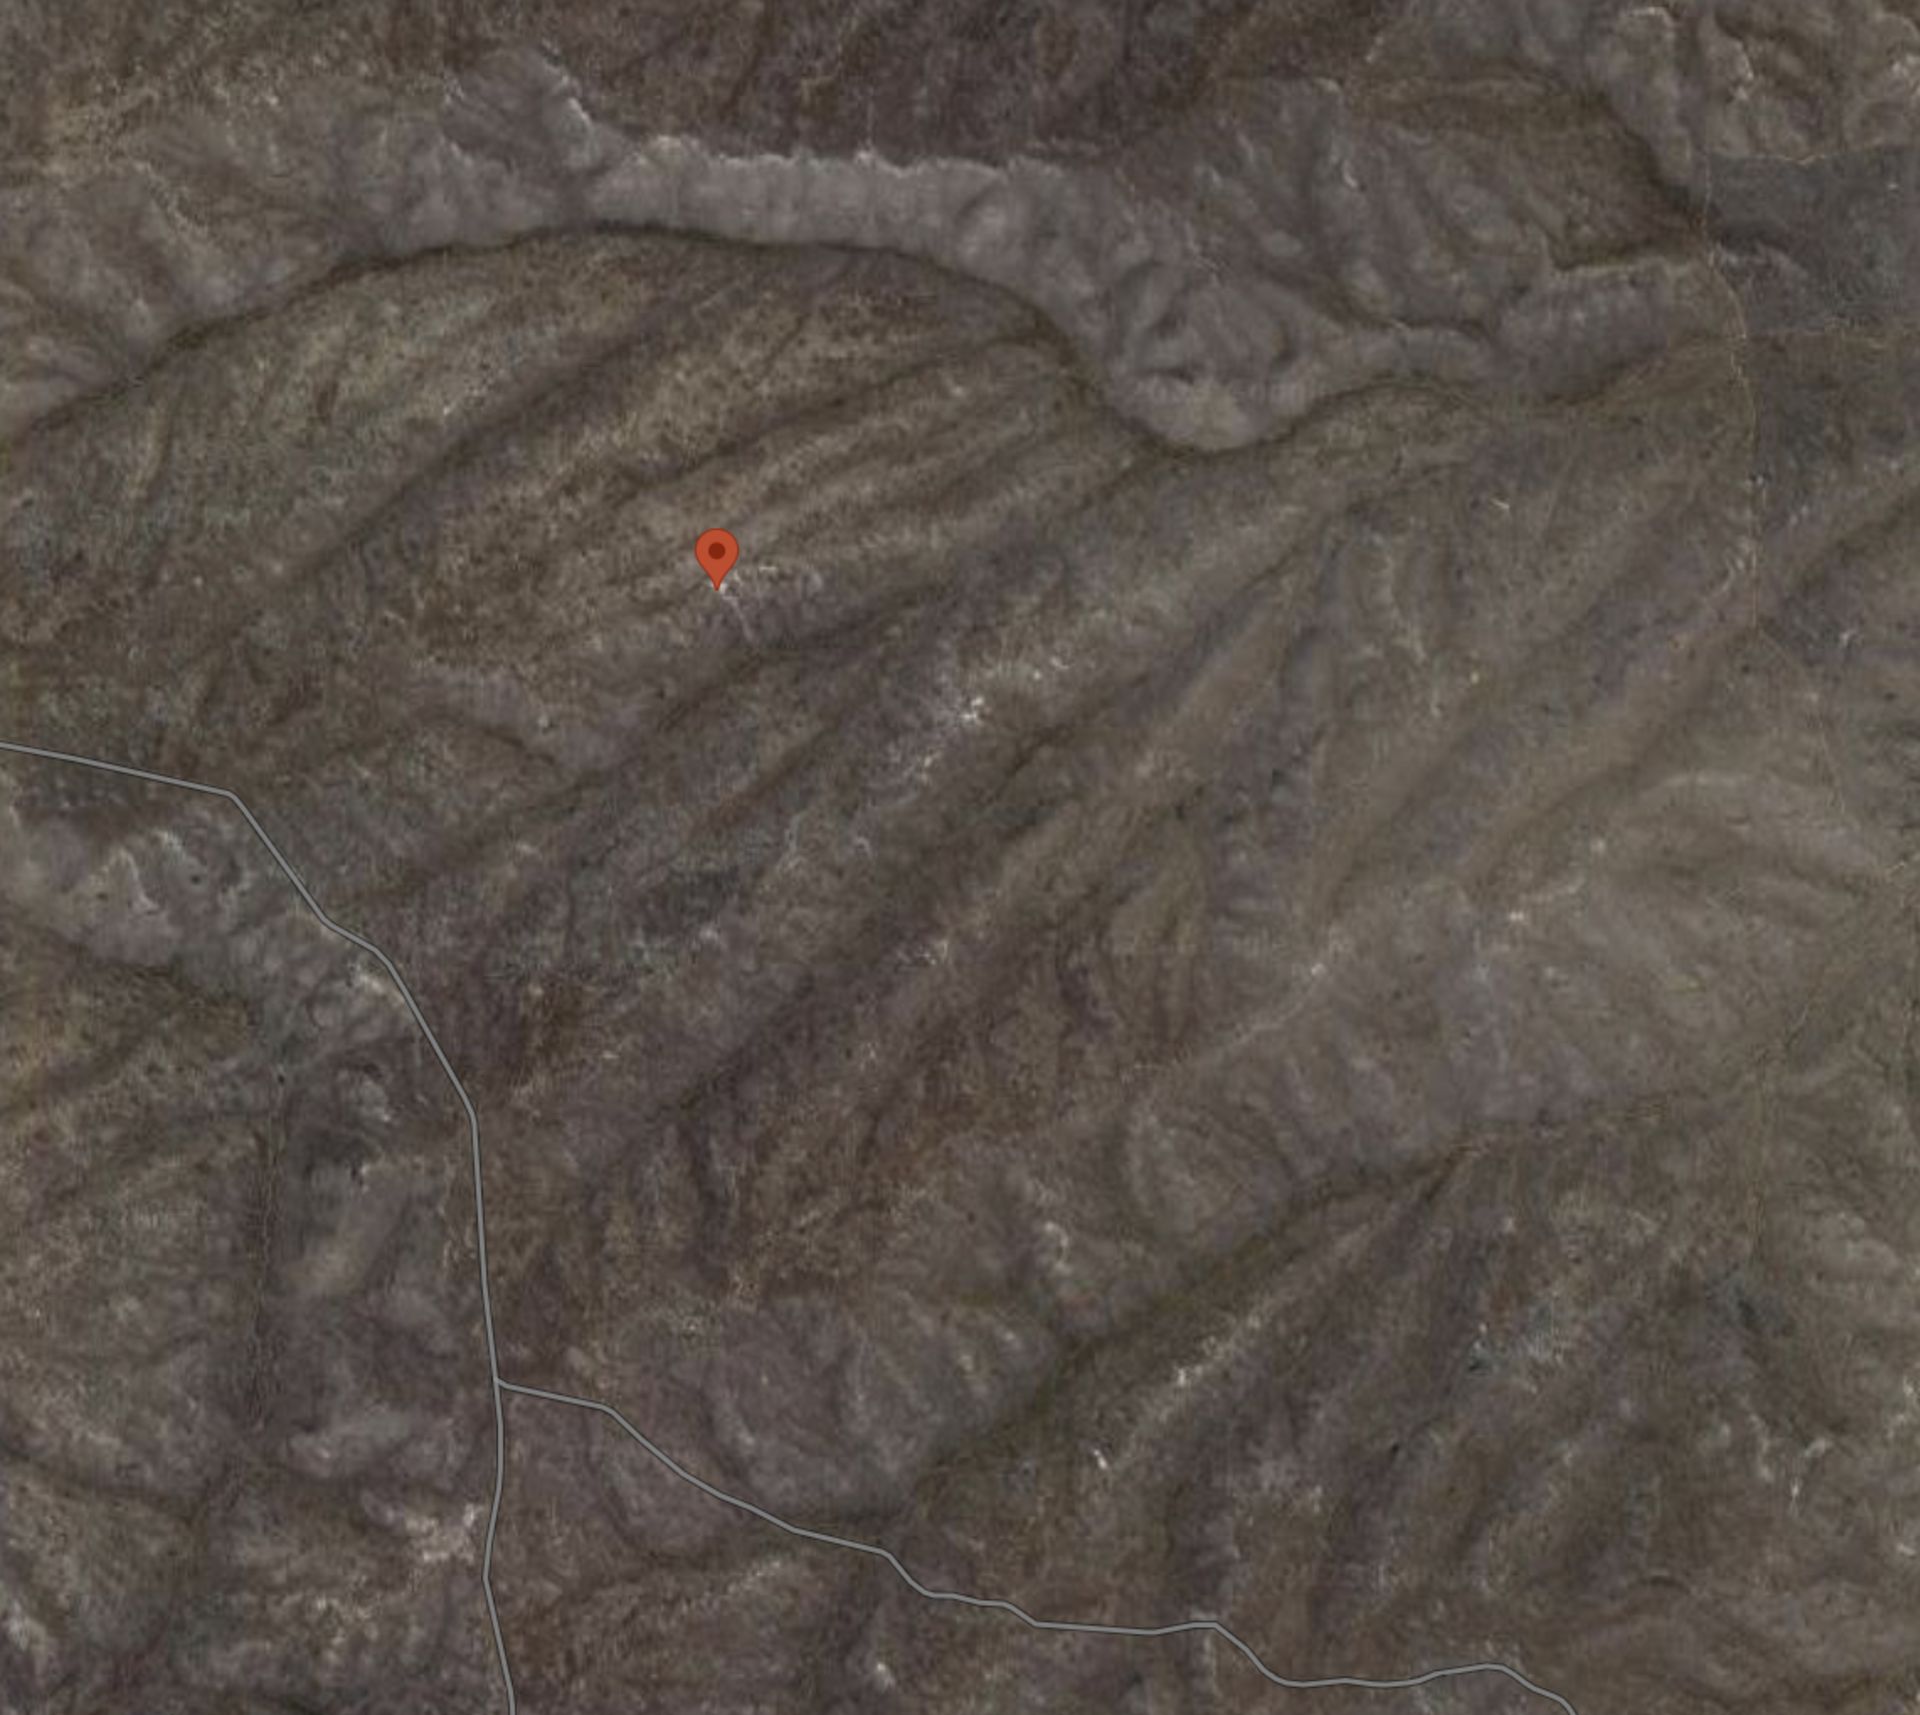 41.85 Acres in Elko County's High Mountain Desert! - Image 11 of 14